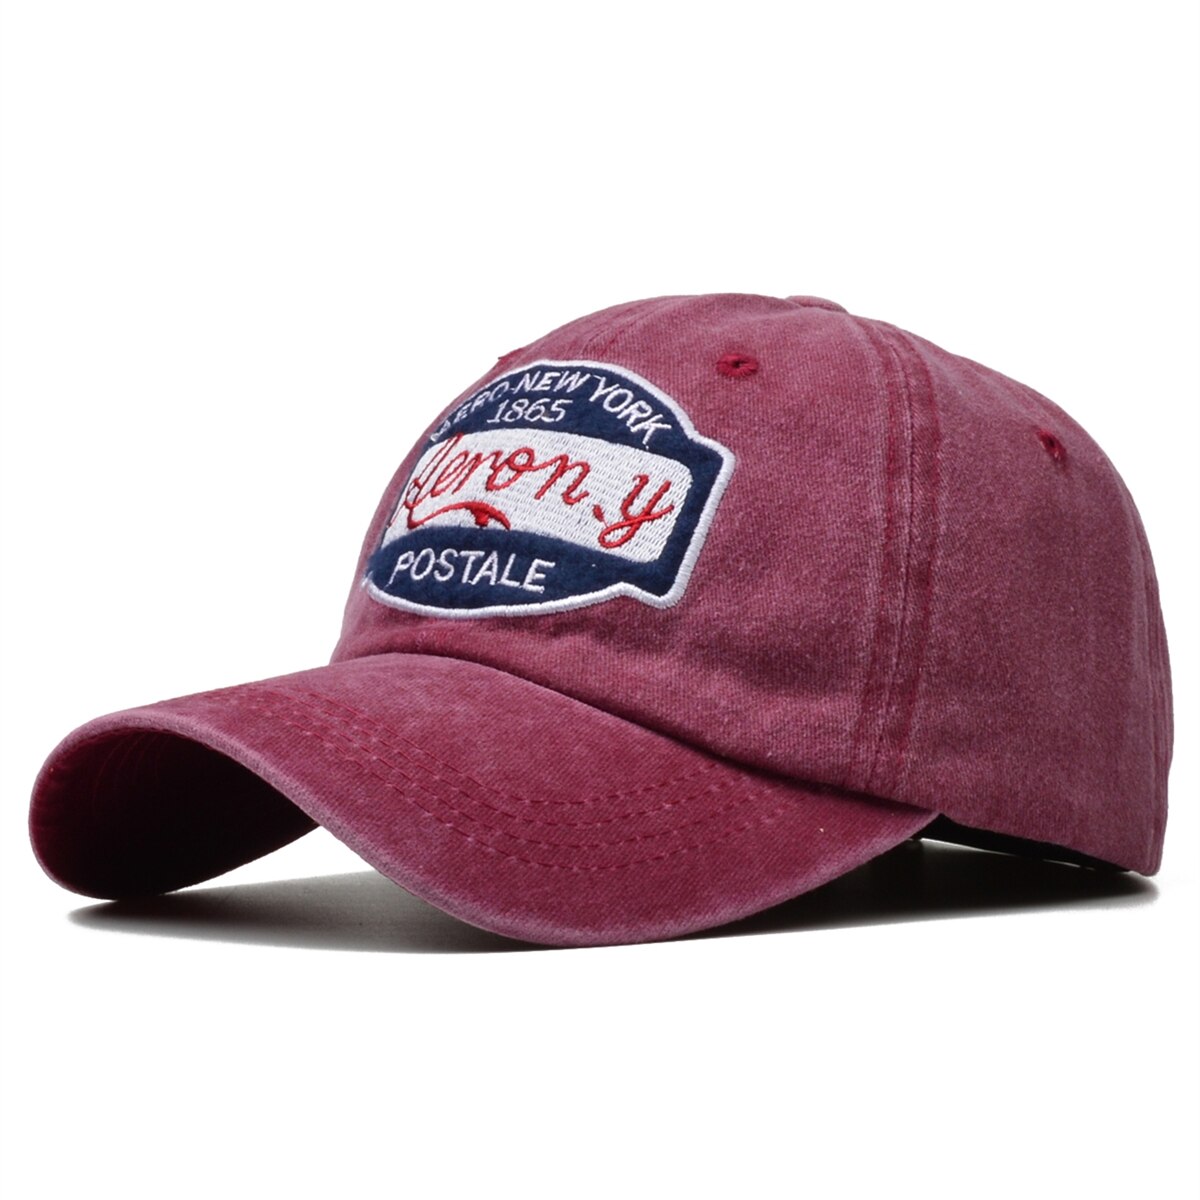 Fashion Pattern Baseball Cap for Men Cotton Women's Dad Hat Embroidery Snapback Adjustable Kpop Golf Cap Bone